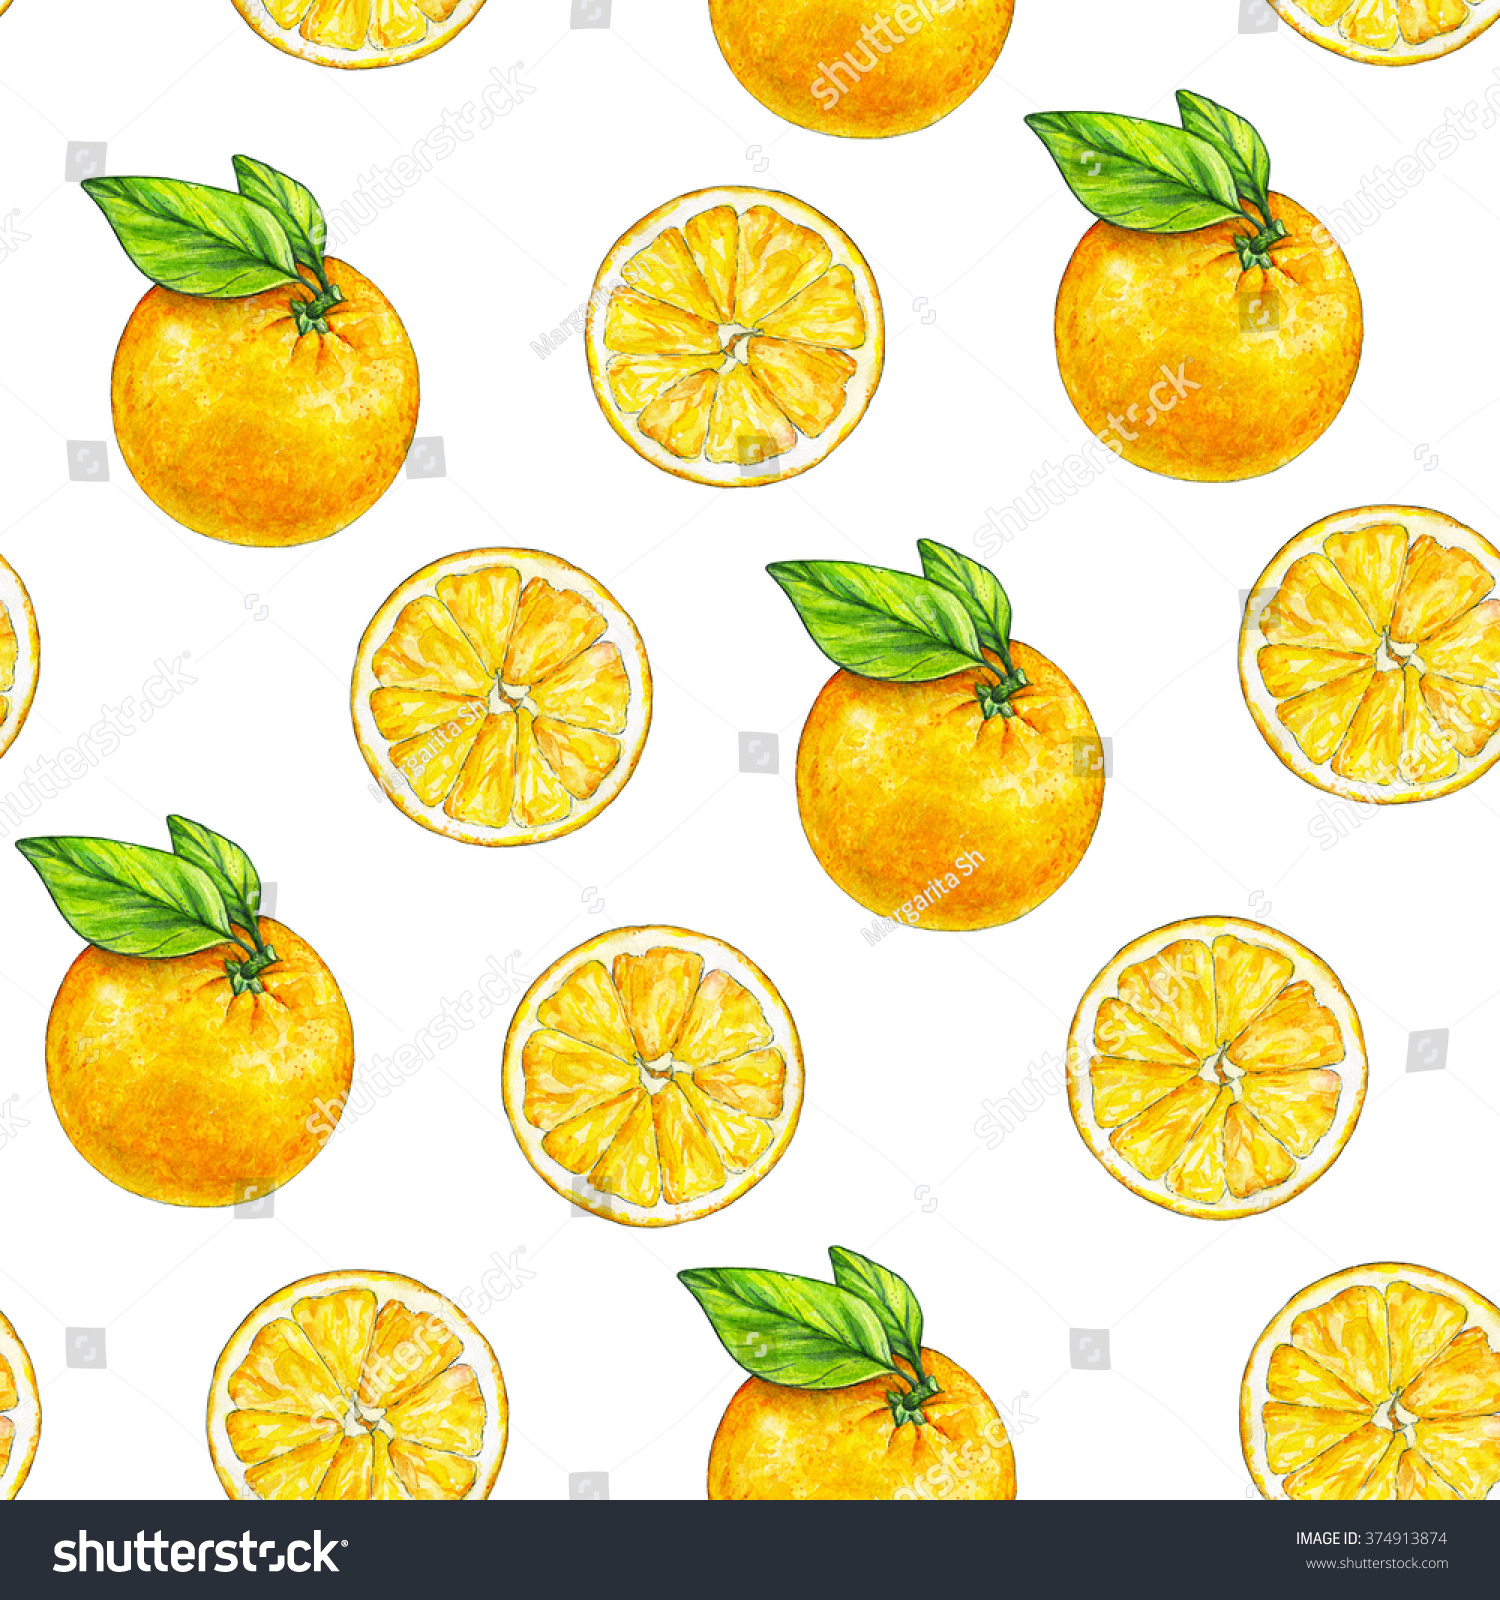 mandarin orange coloring pages - photo #35